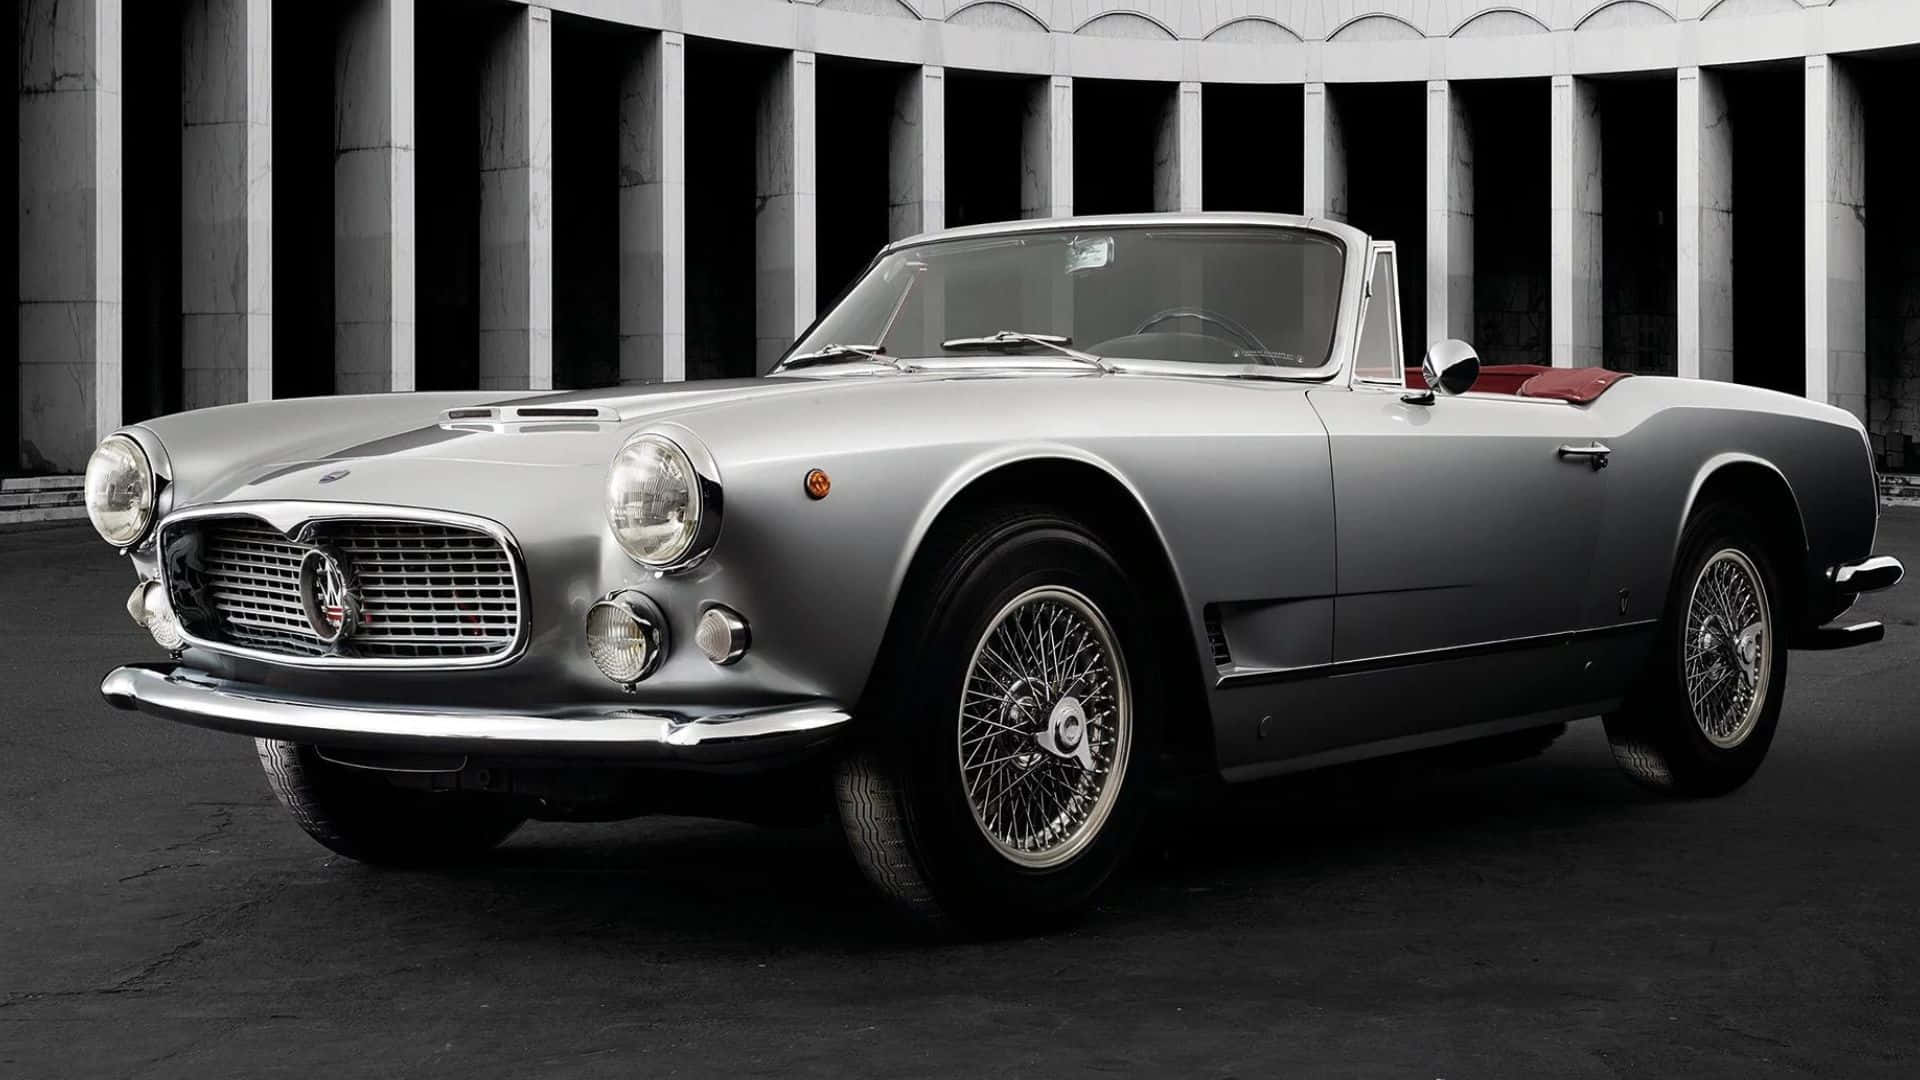 Caption: Sublime Elegance Of Maserati 3500 Gt Wallpaper